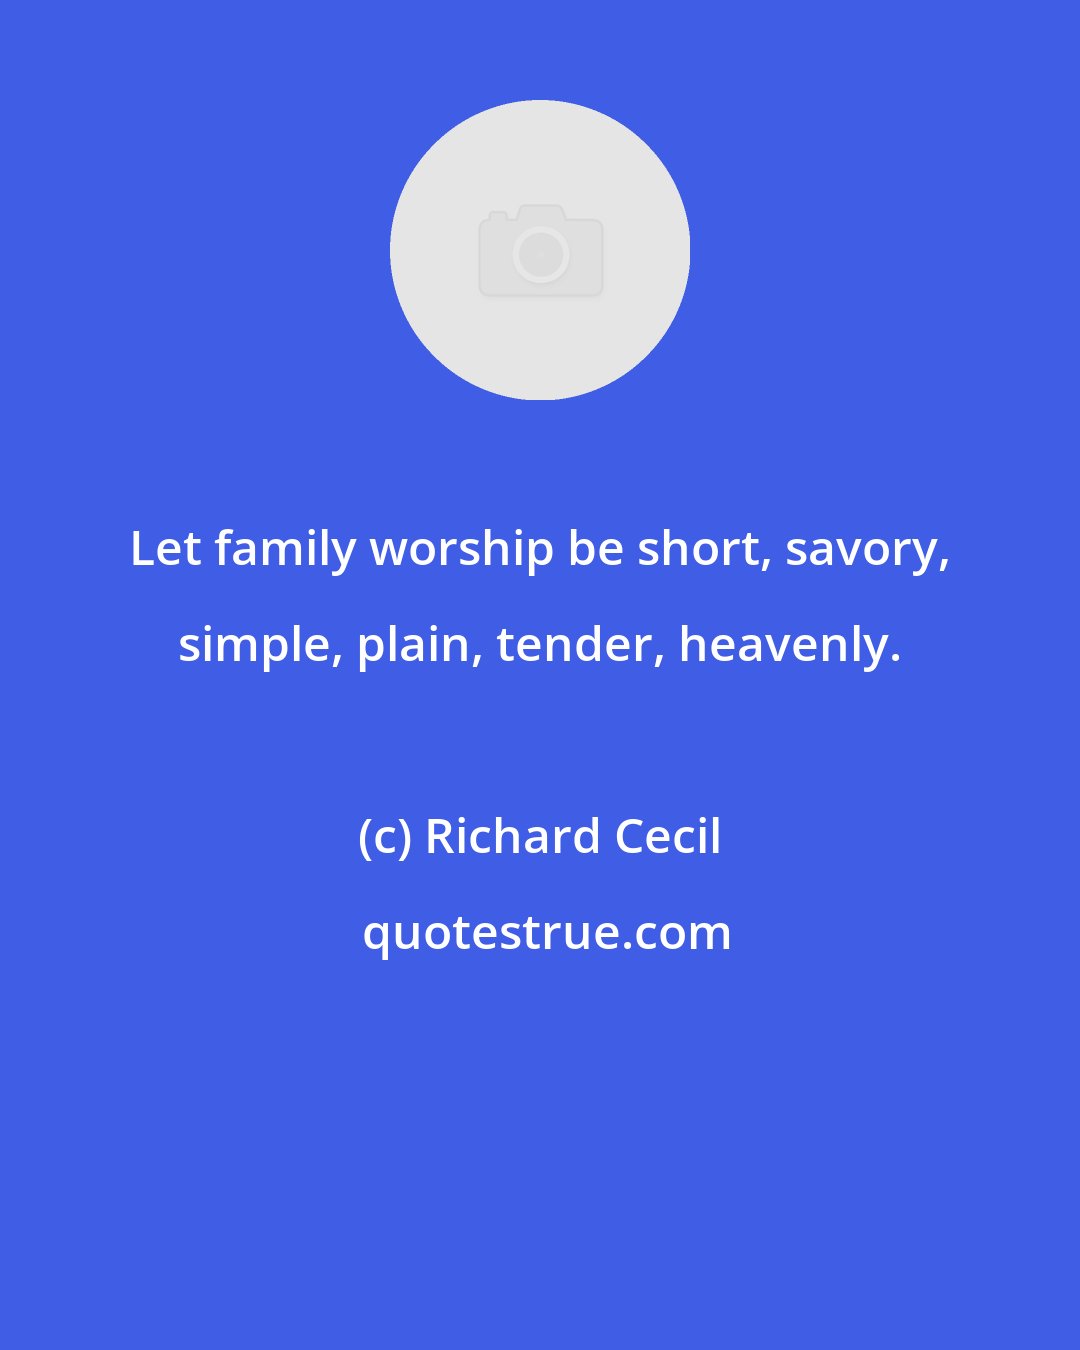 Richard Cecil: Let family worship be short, savory, simple, plain, tender, heavenly.